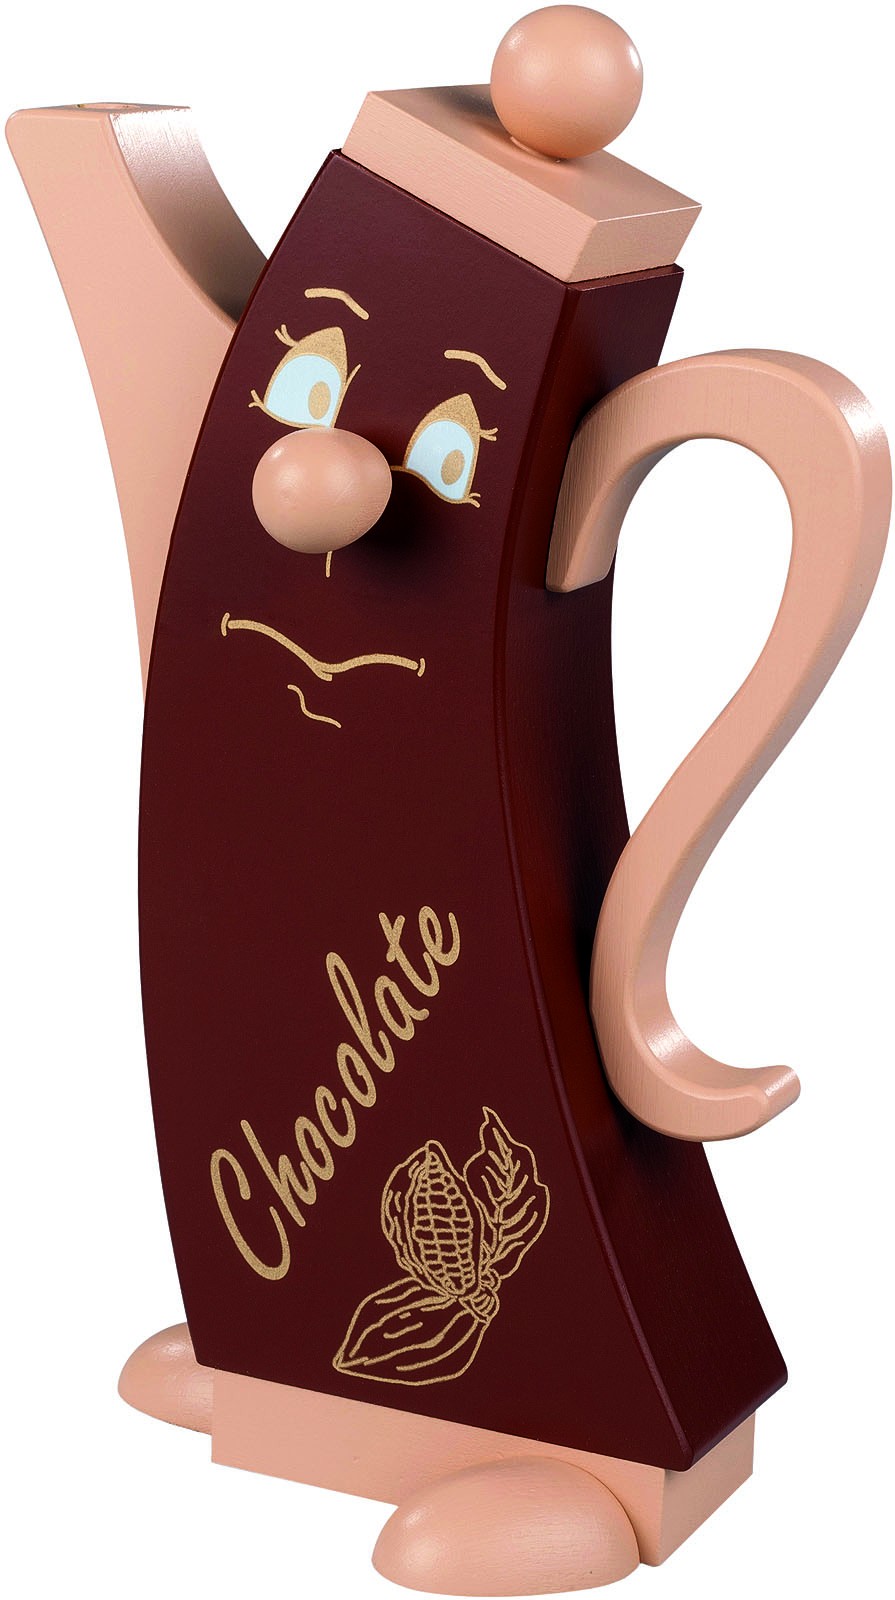 Räucherfigur Chocolate, modern